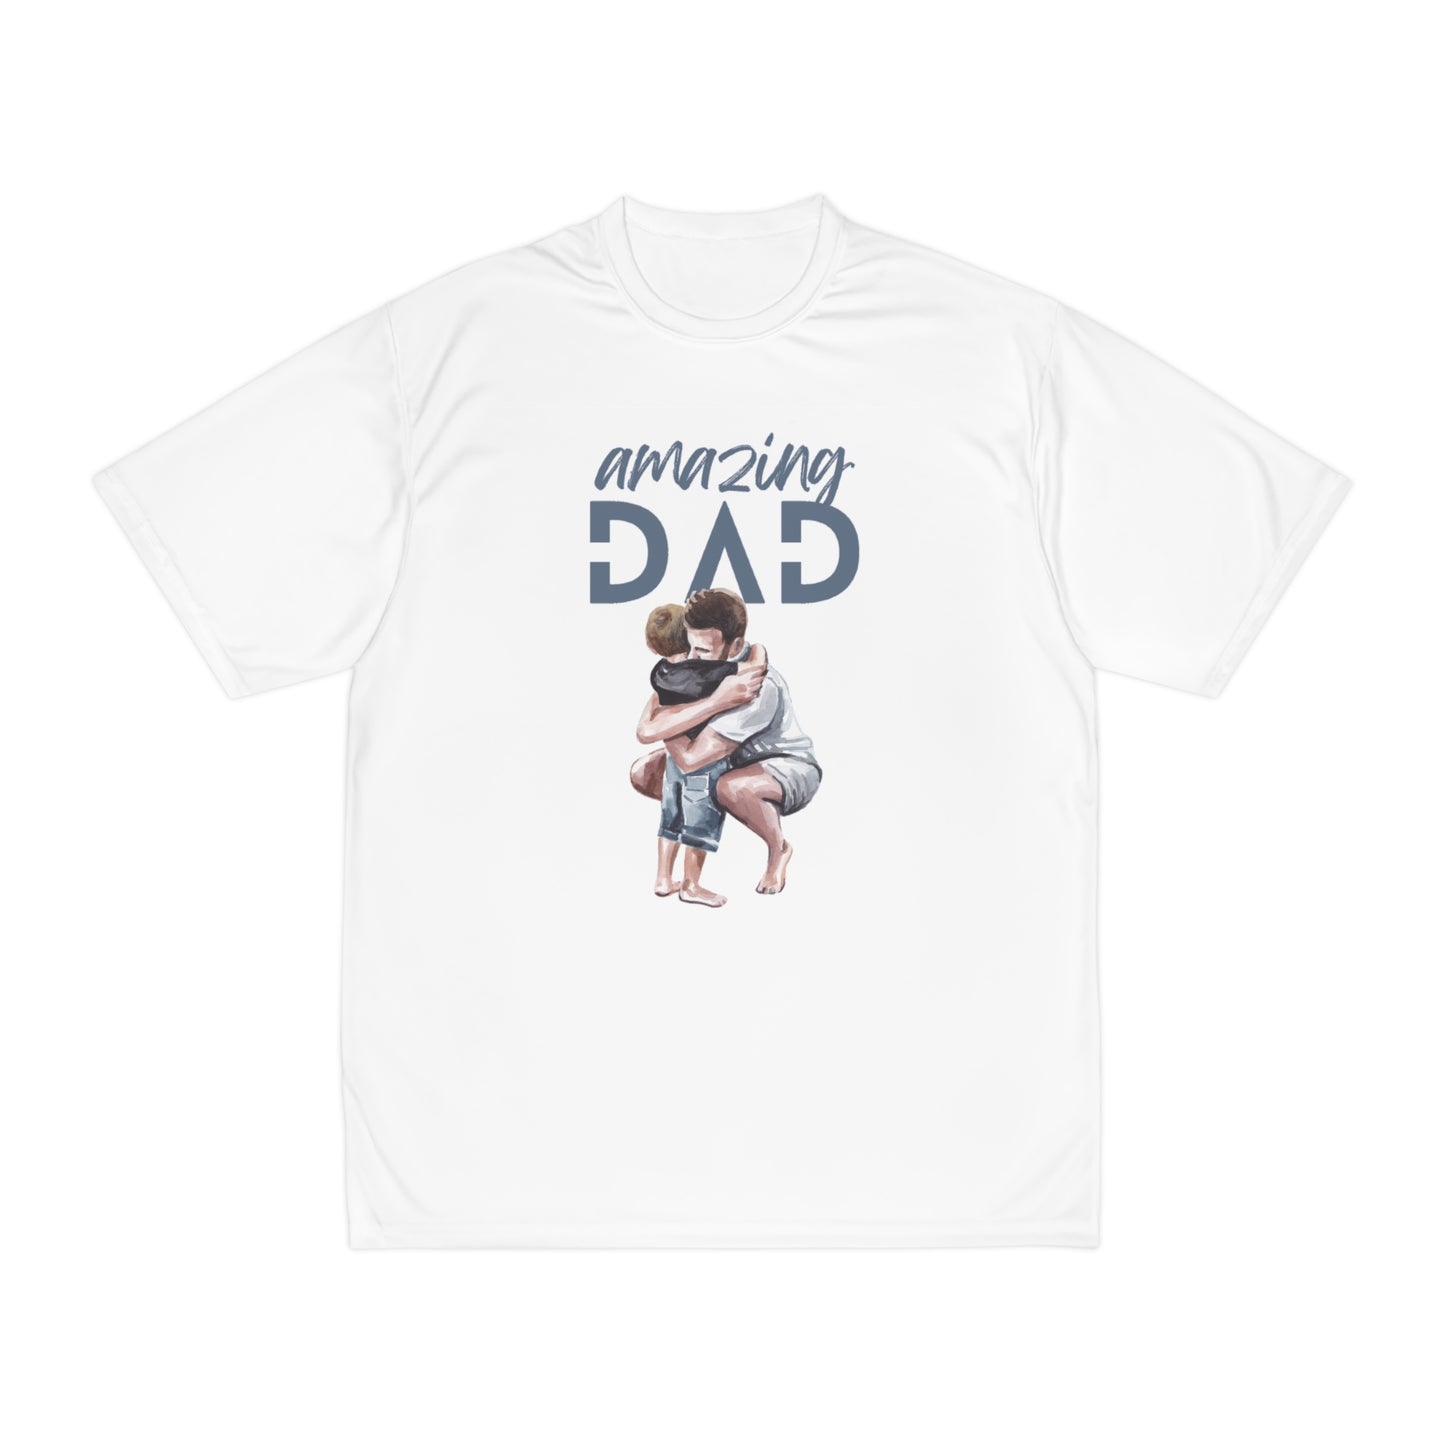 Amazing Dad Design Men's Performance T-Shirt